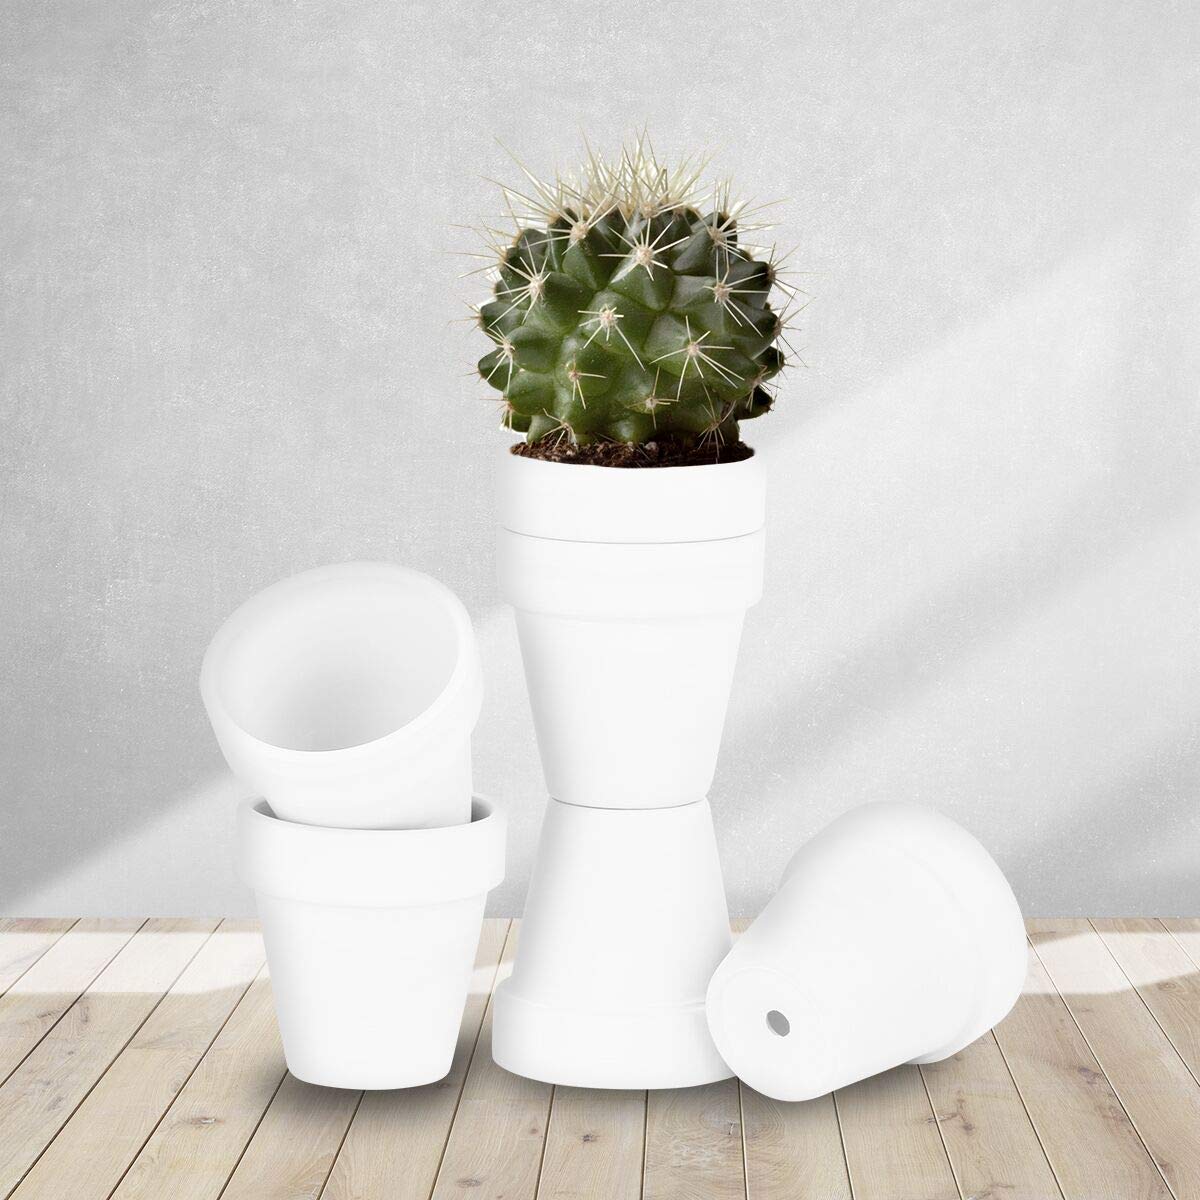 FCFKUK 24pcs Small Mini Clay Pots, 2.5'' Terracotta Pot Clay Ceramic Pottery Planter, Cactus Flower Terra Cotta Pots, Succulents Nurser